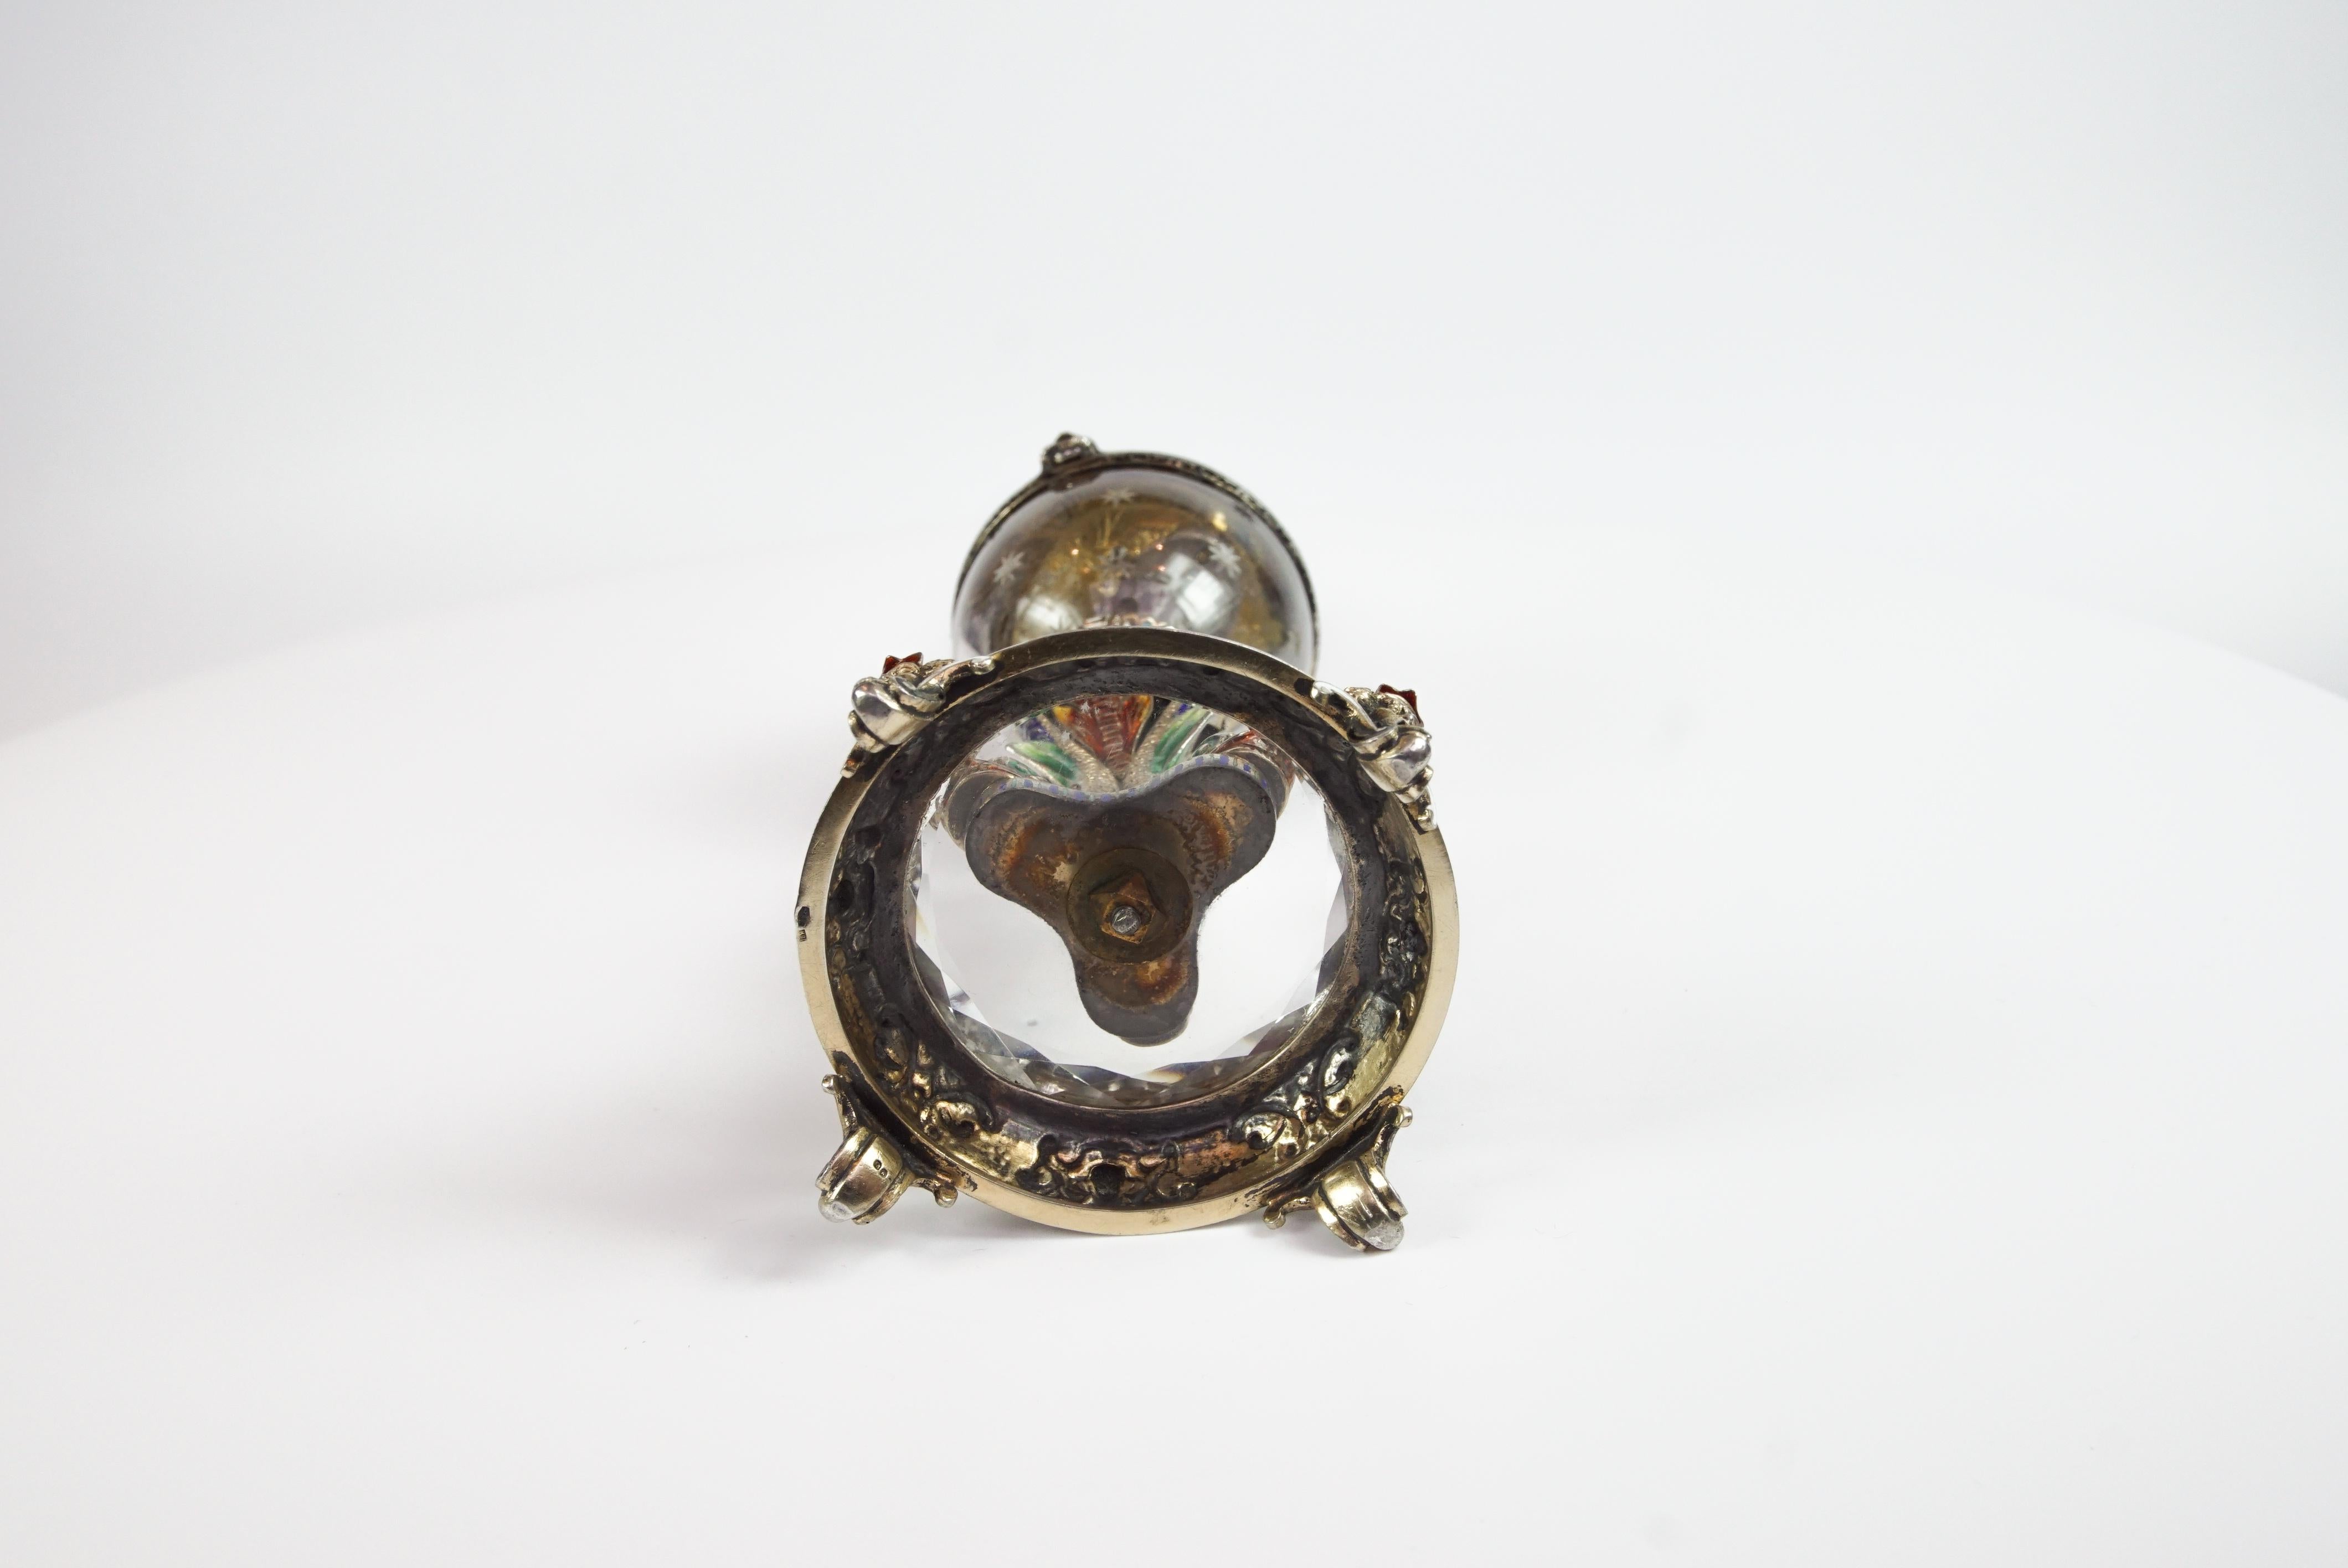 Rare Silver, Rock Crystal, and Enamel Globe 'Vienna Egg' Clock by Hermann Bohm 1